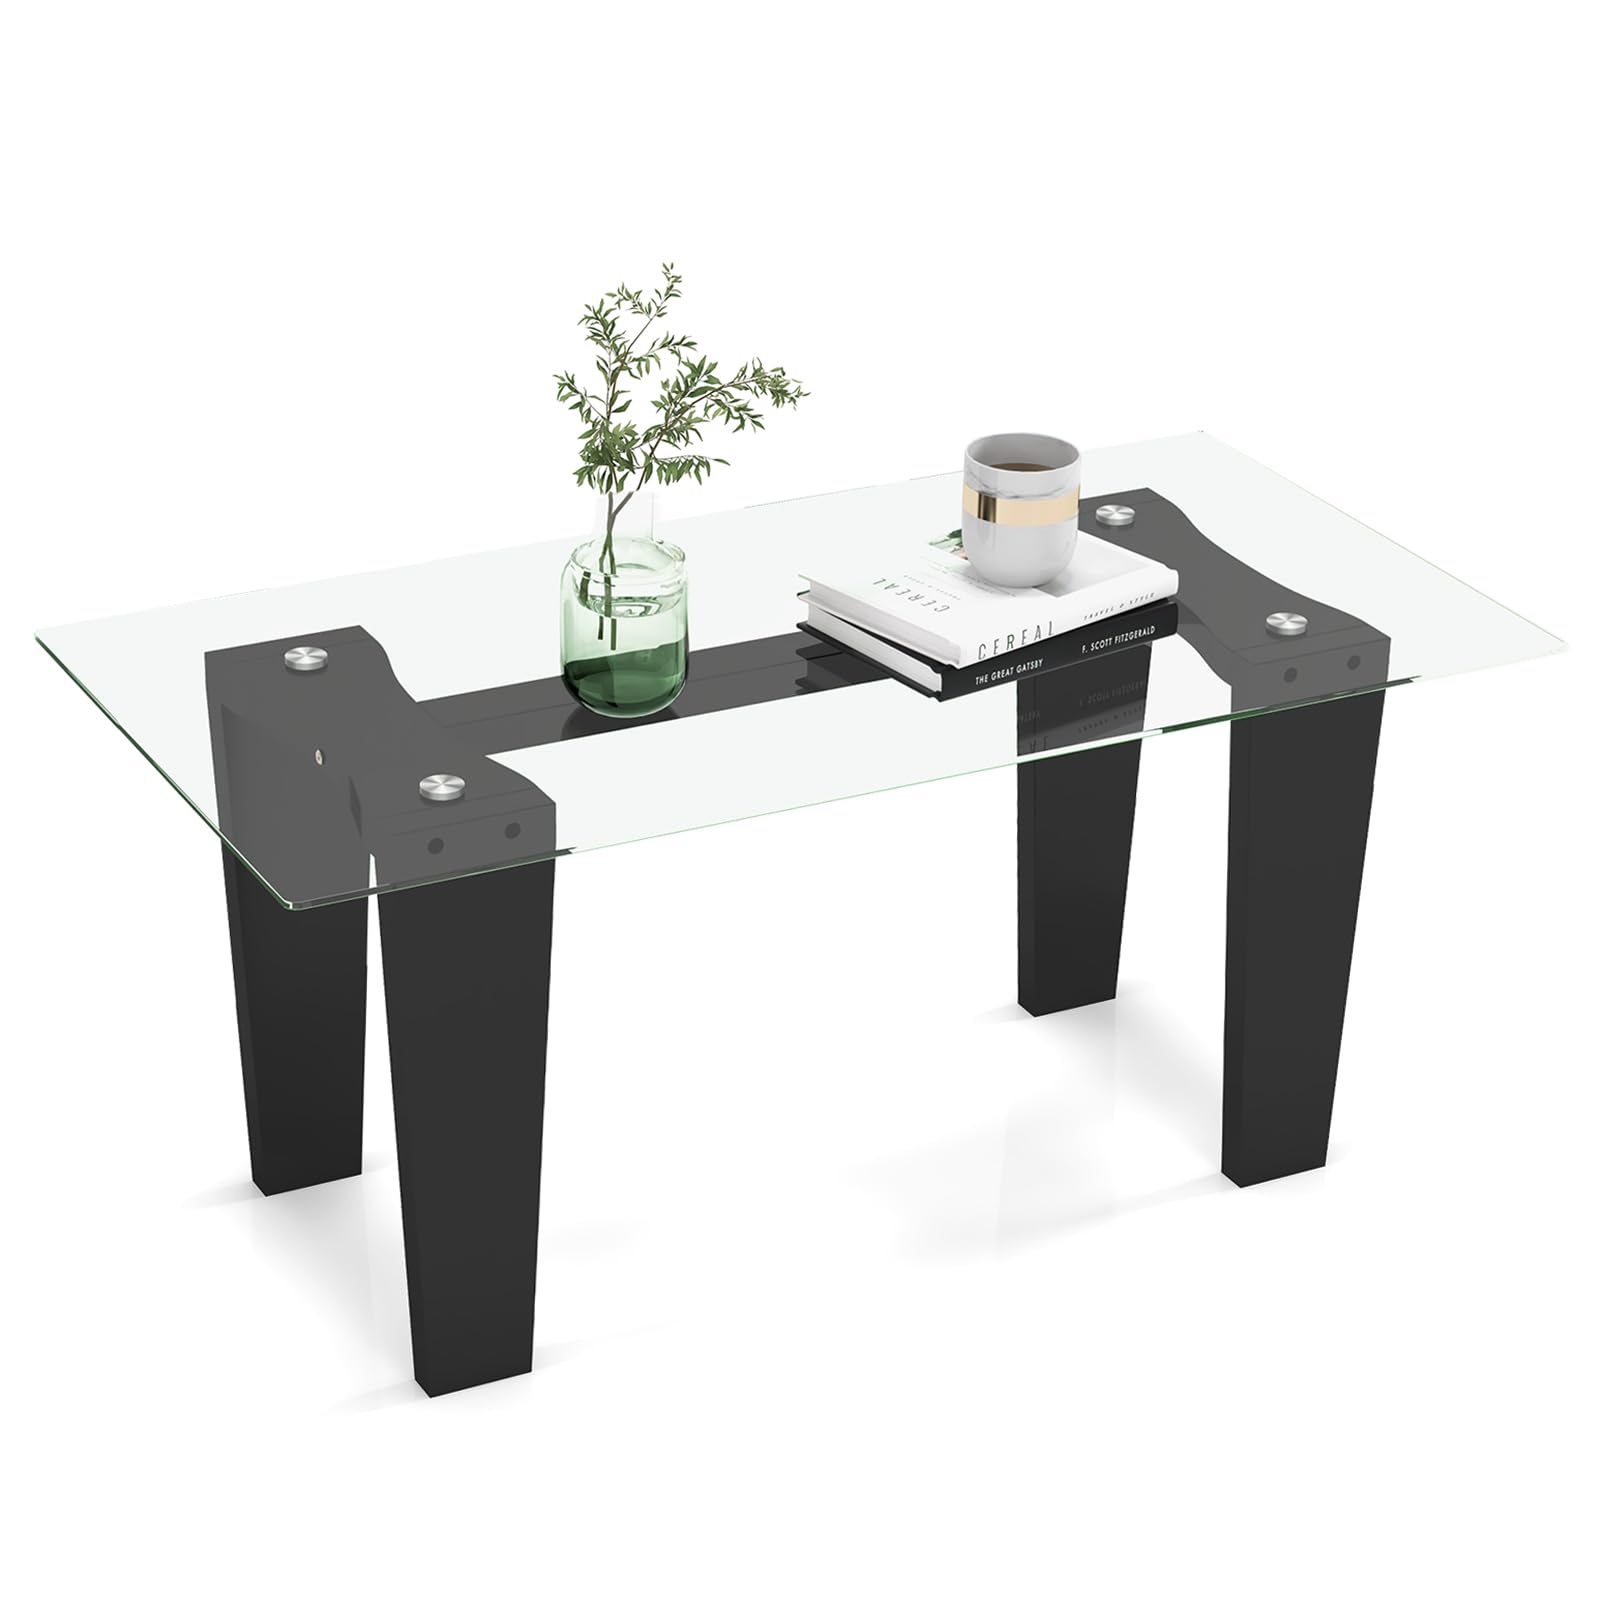 Giantex Rectangular Glass Coffee Table